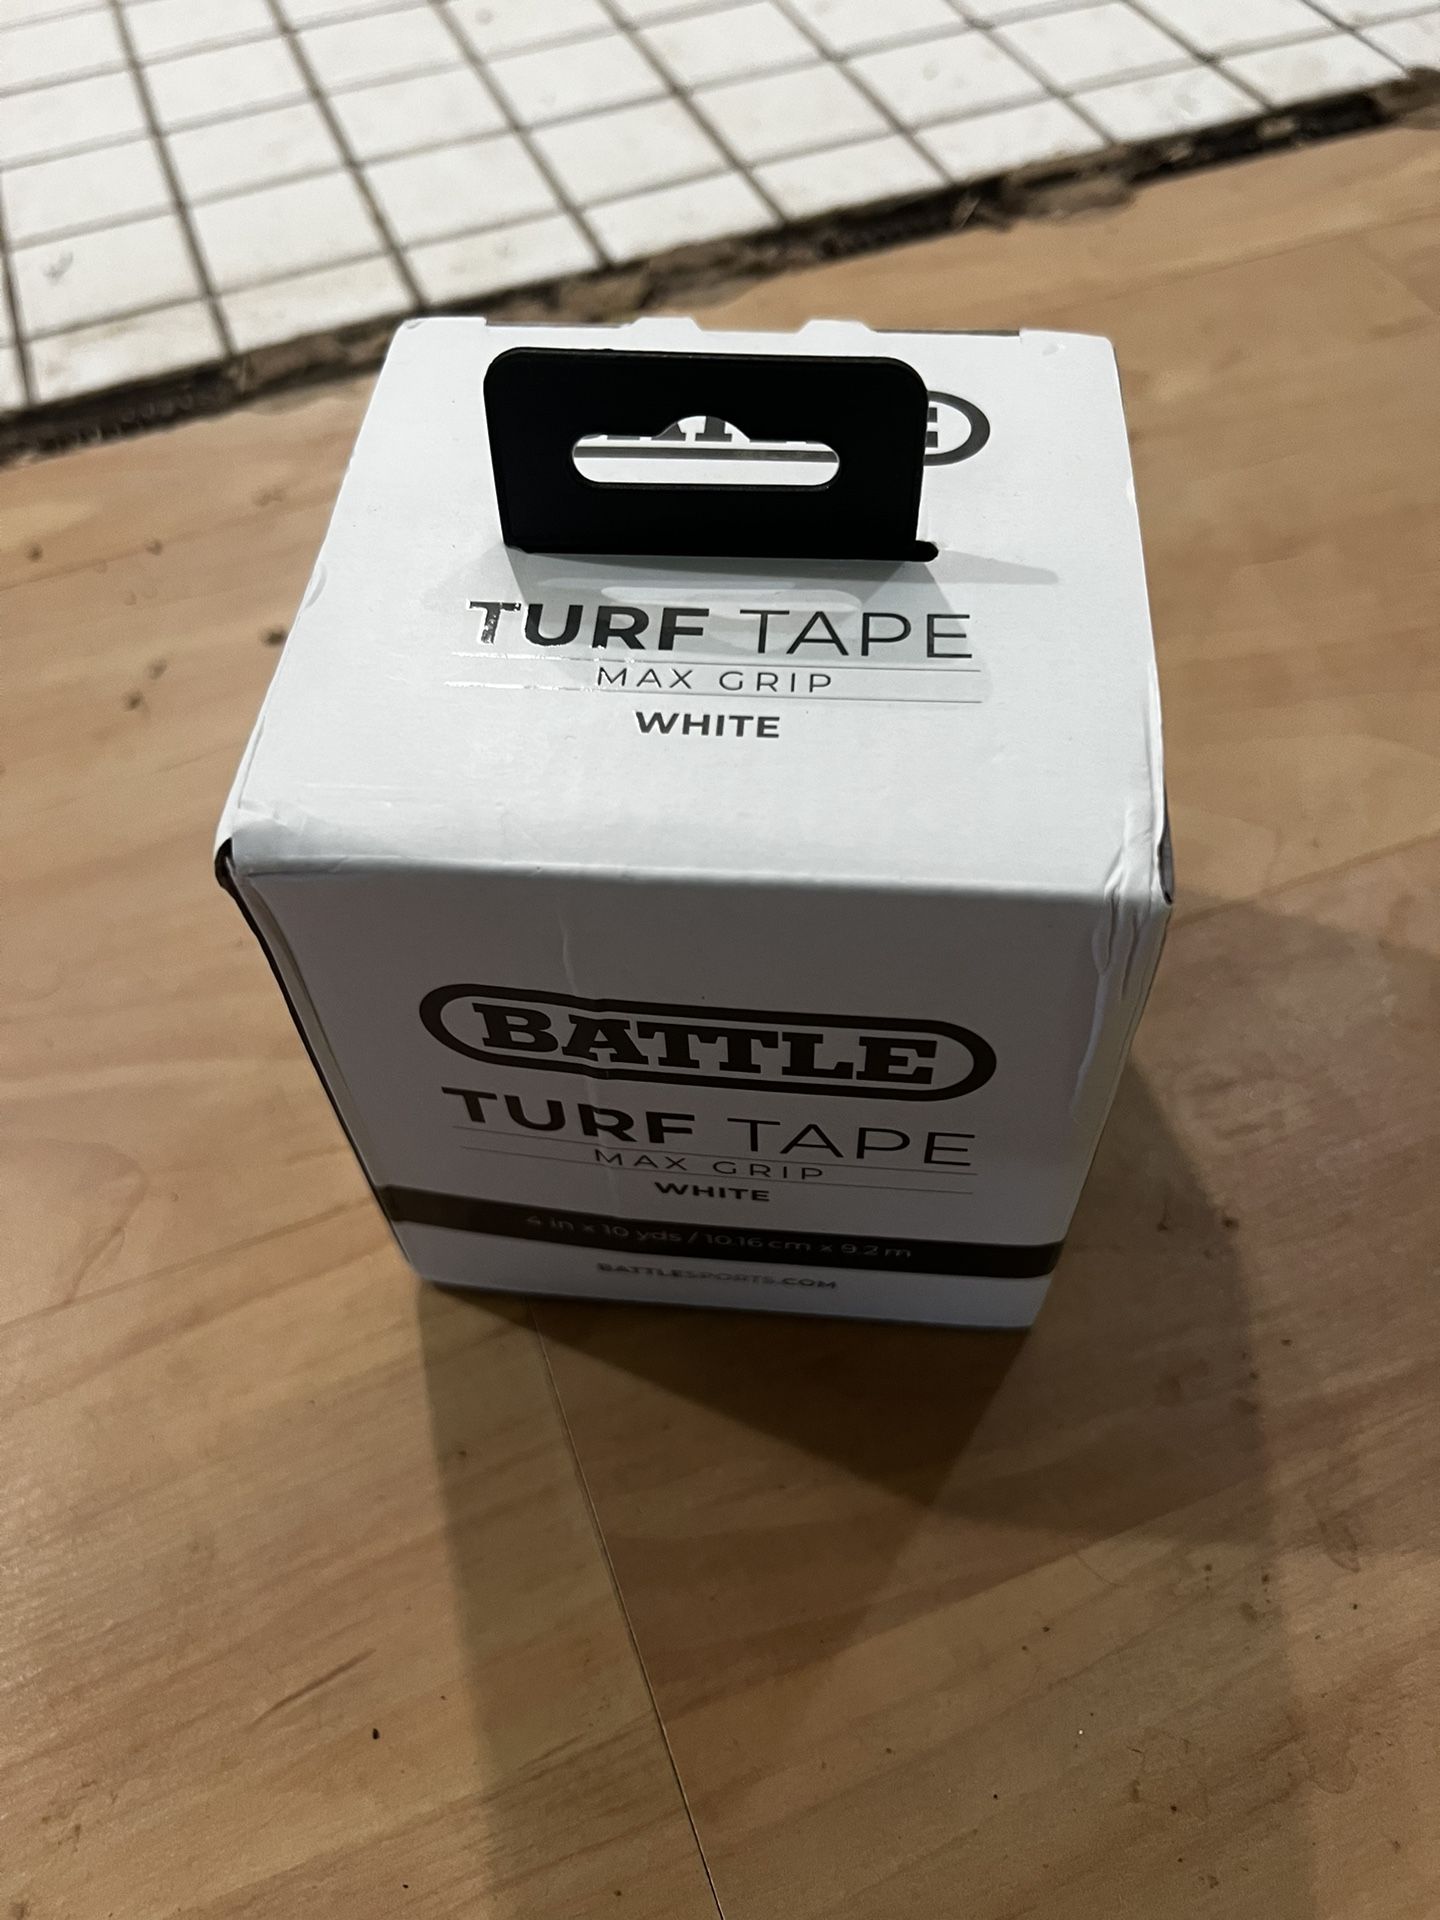 Battle Turf Tape